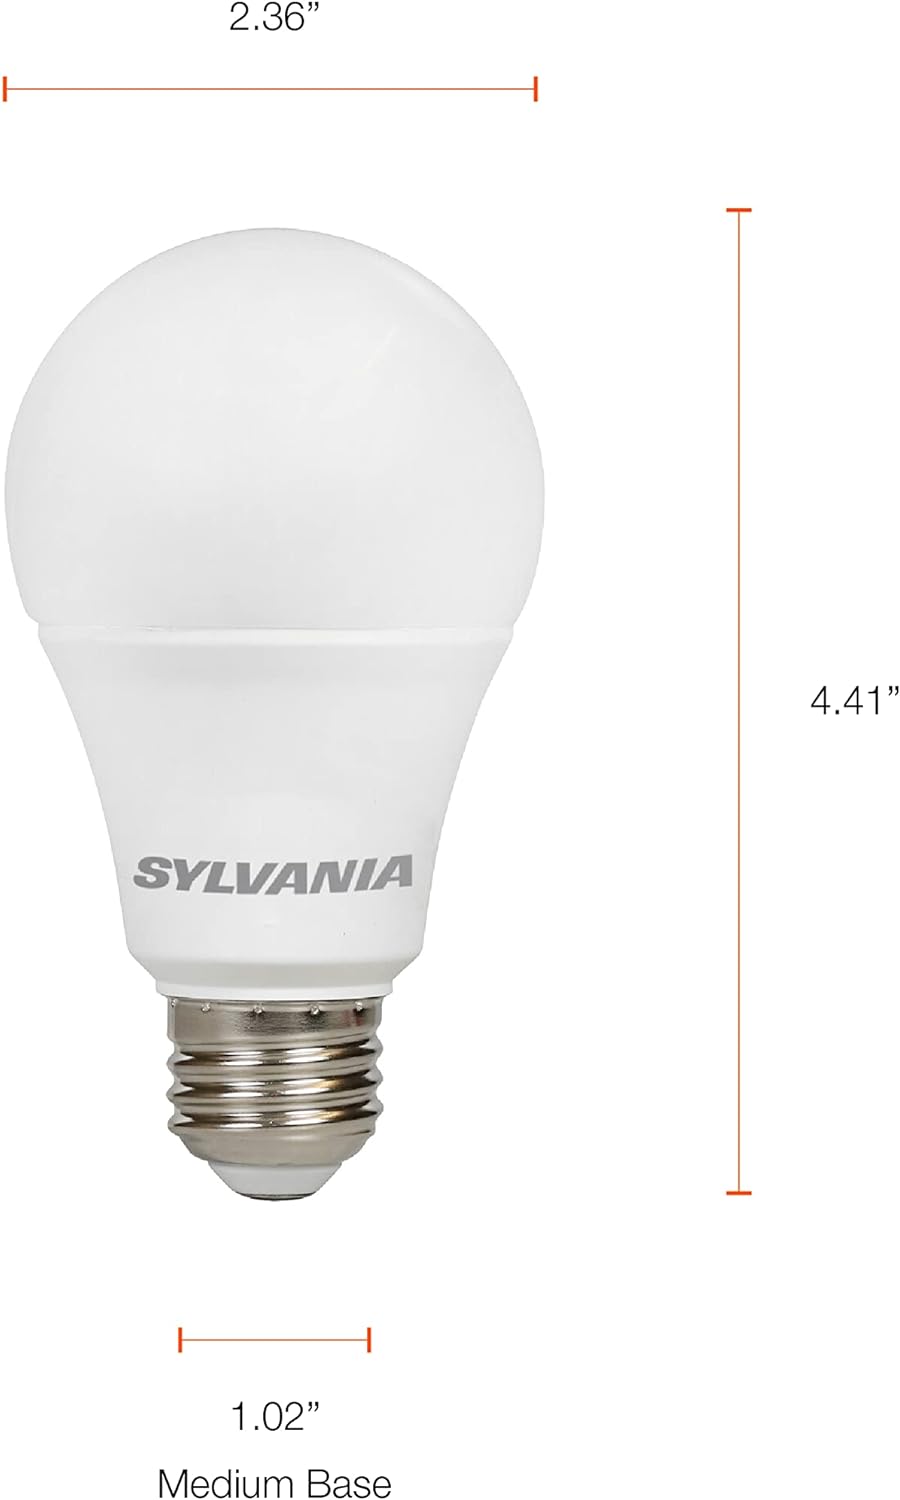 SYLVANIA LED Light Bulb Review